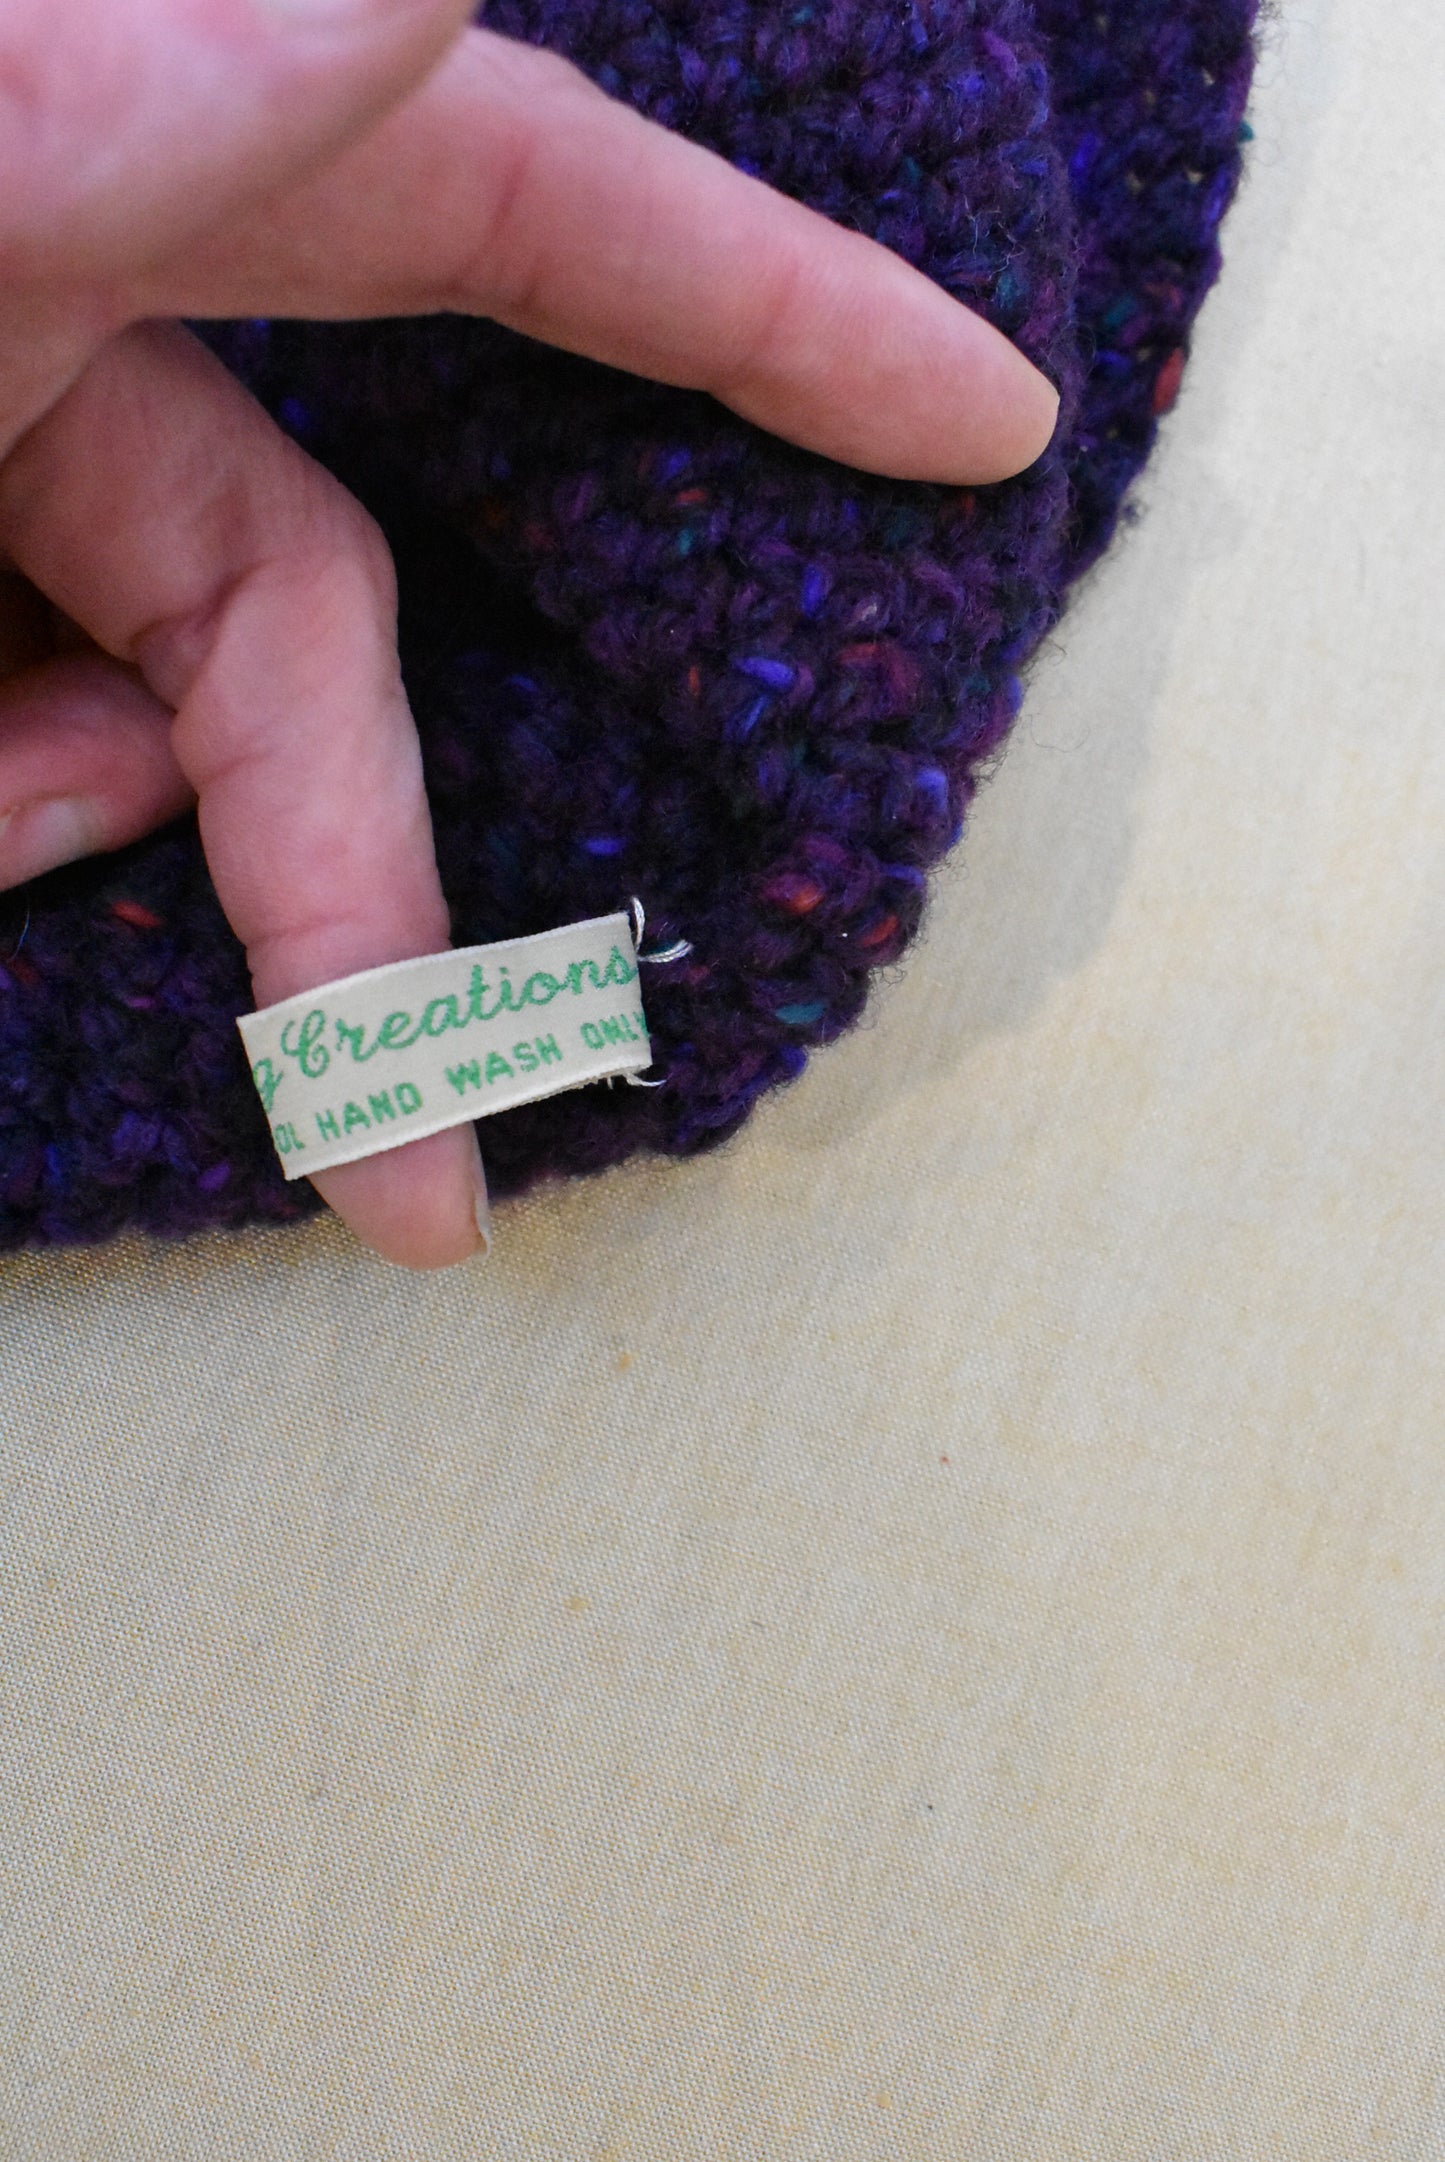 FFrog Creathions purple wool crochet beanie